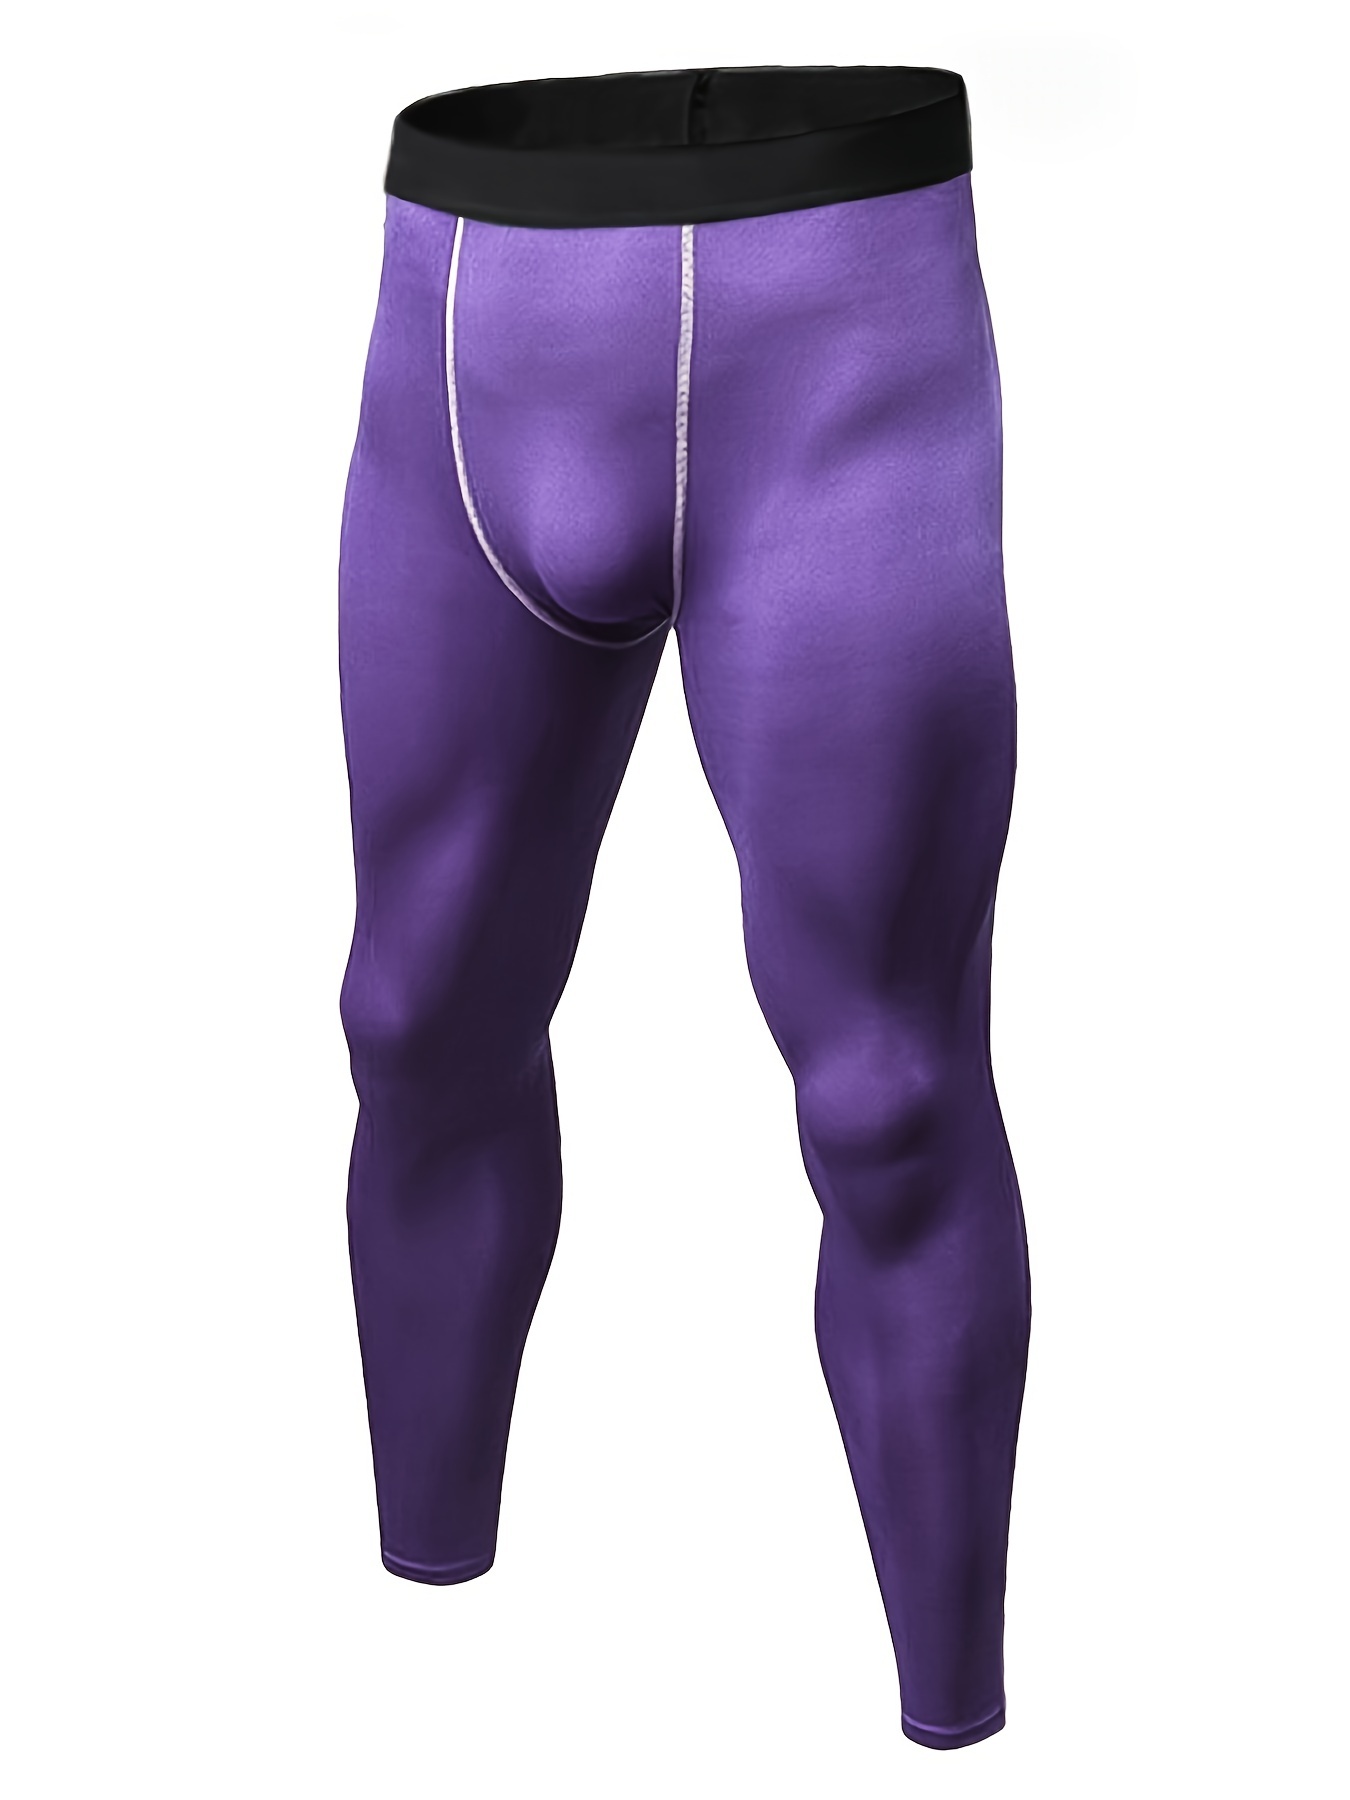  6 Pcs Men's Compression Pants Athletic Running Tights